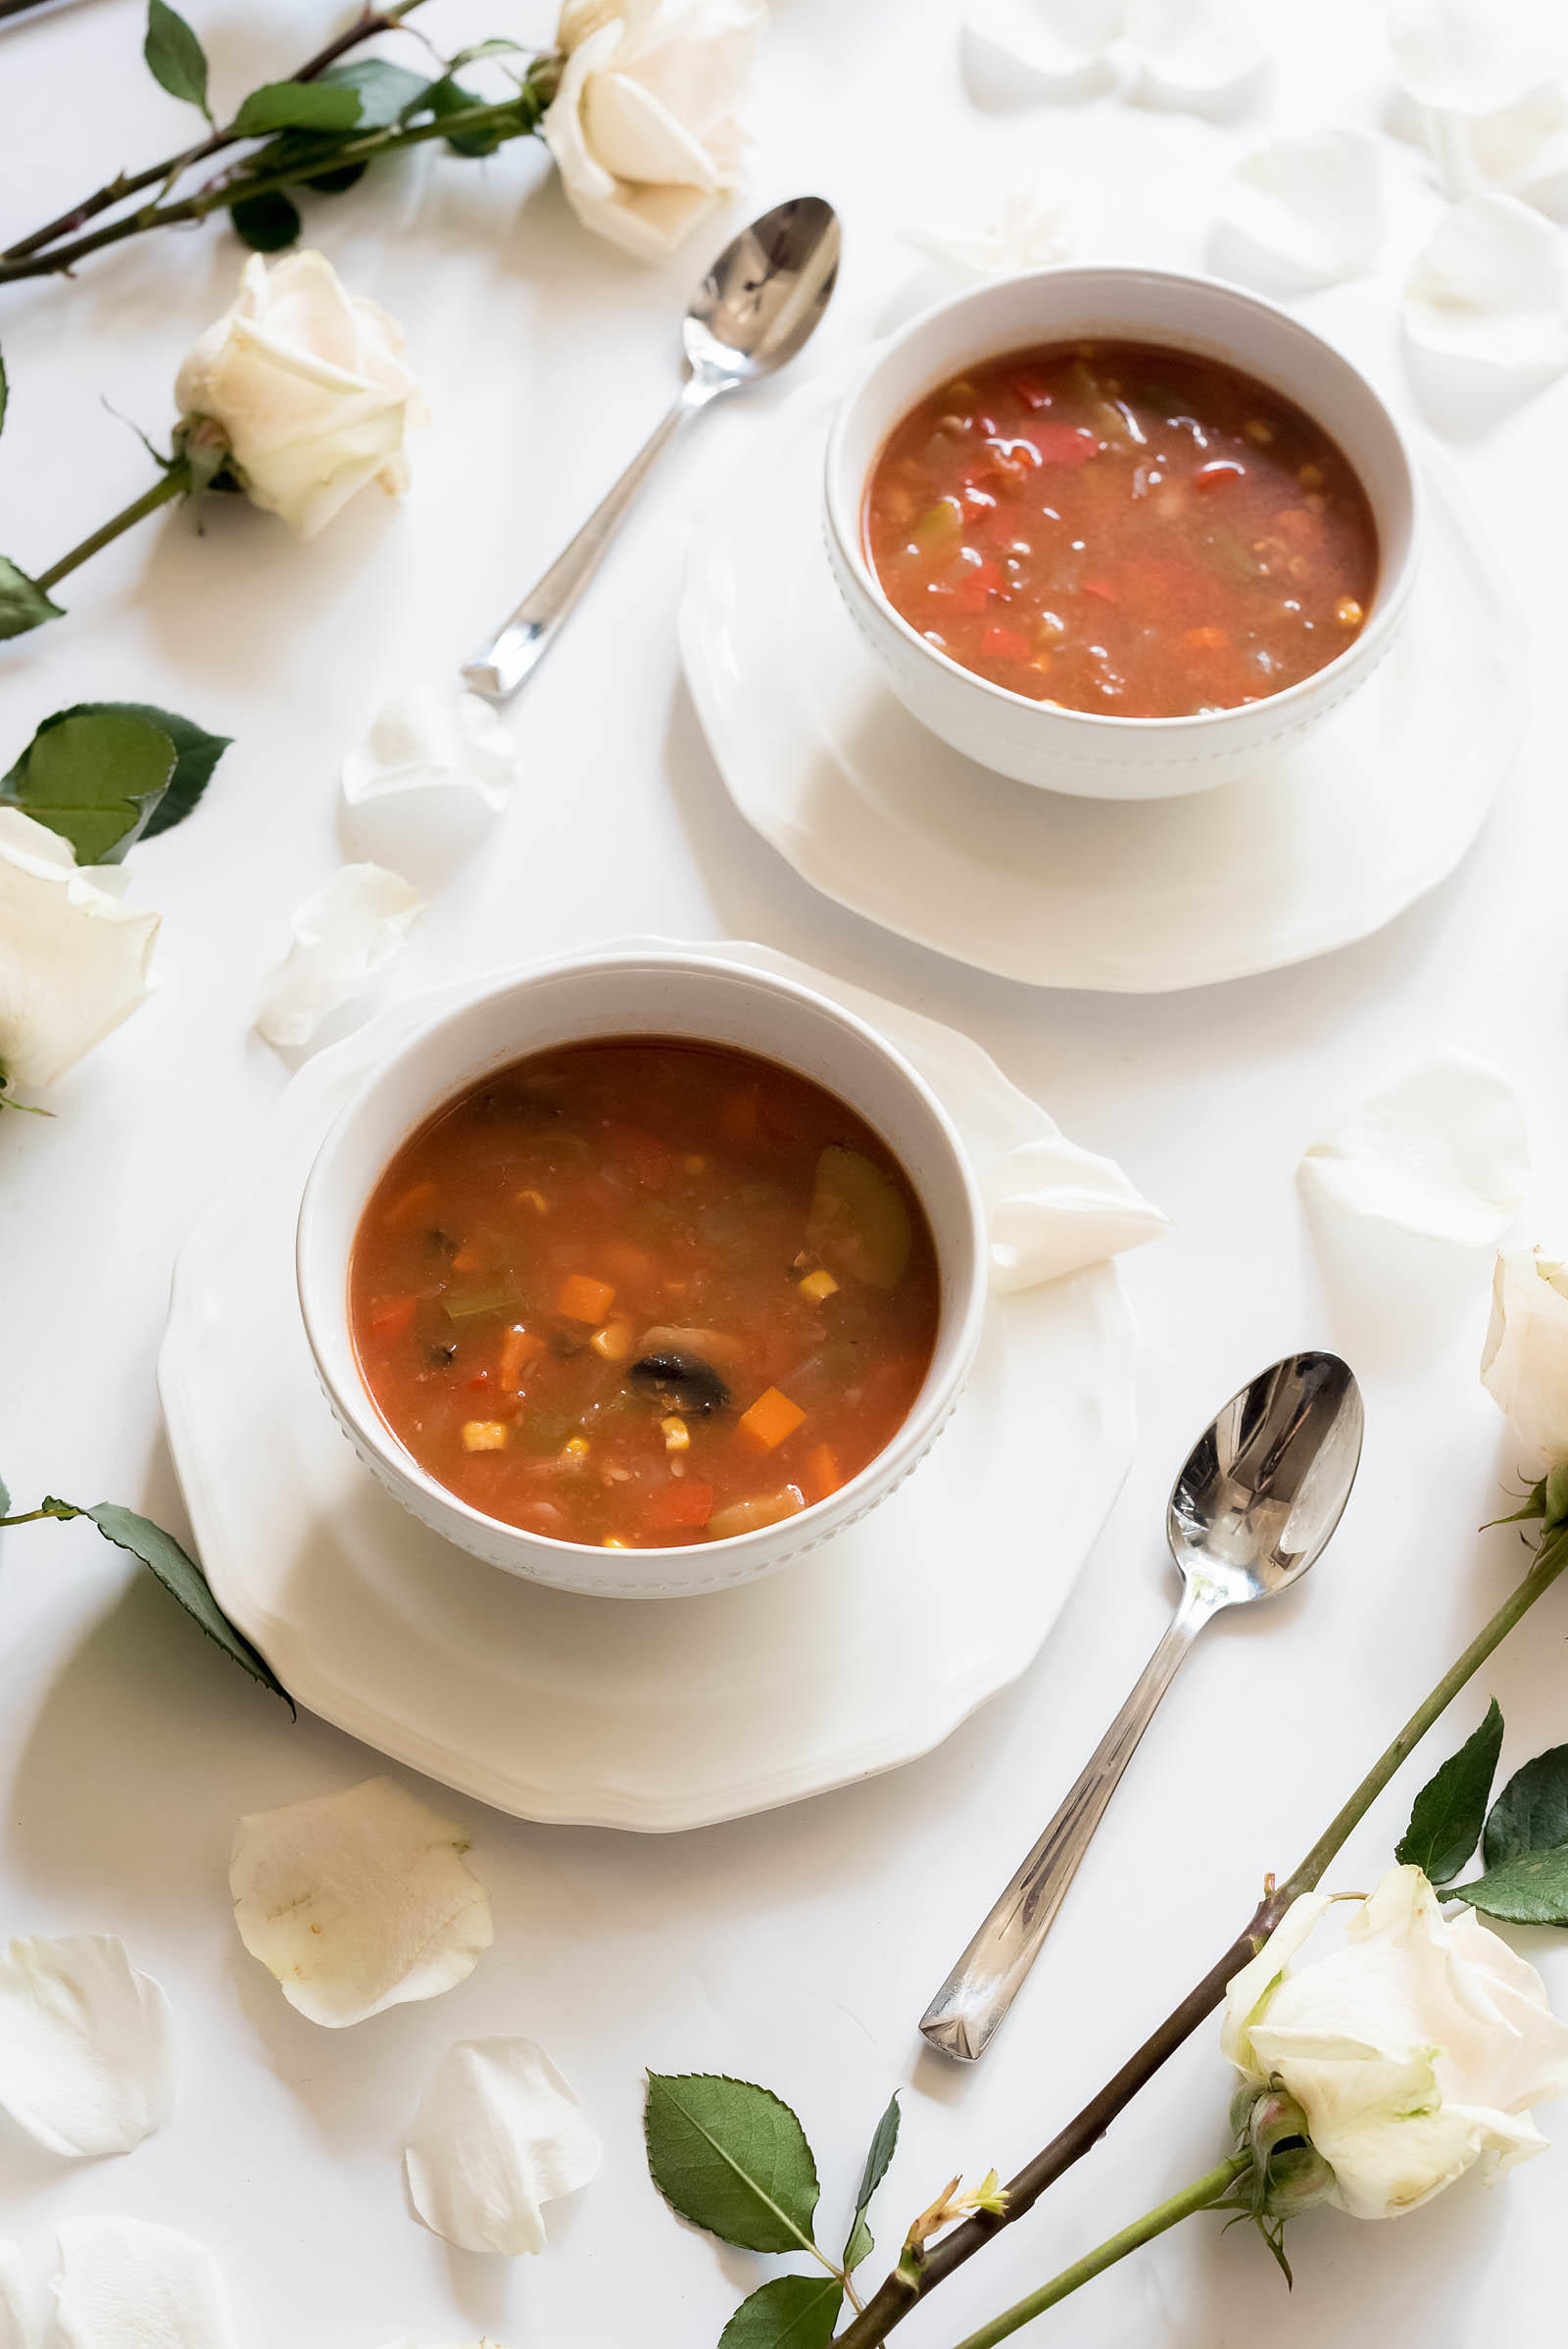 Easy Vegetable Soup Recipe